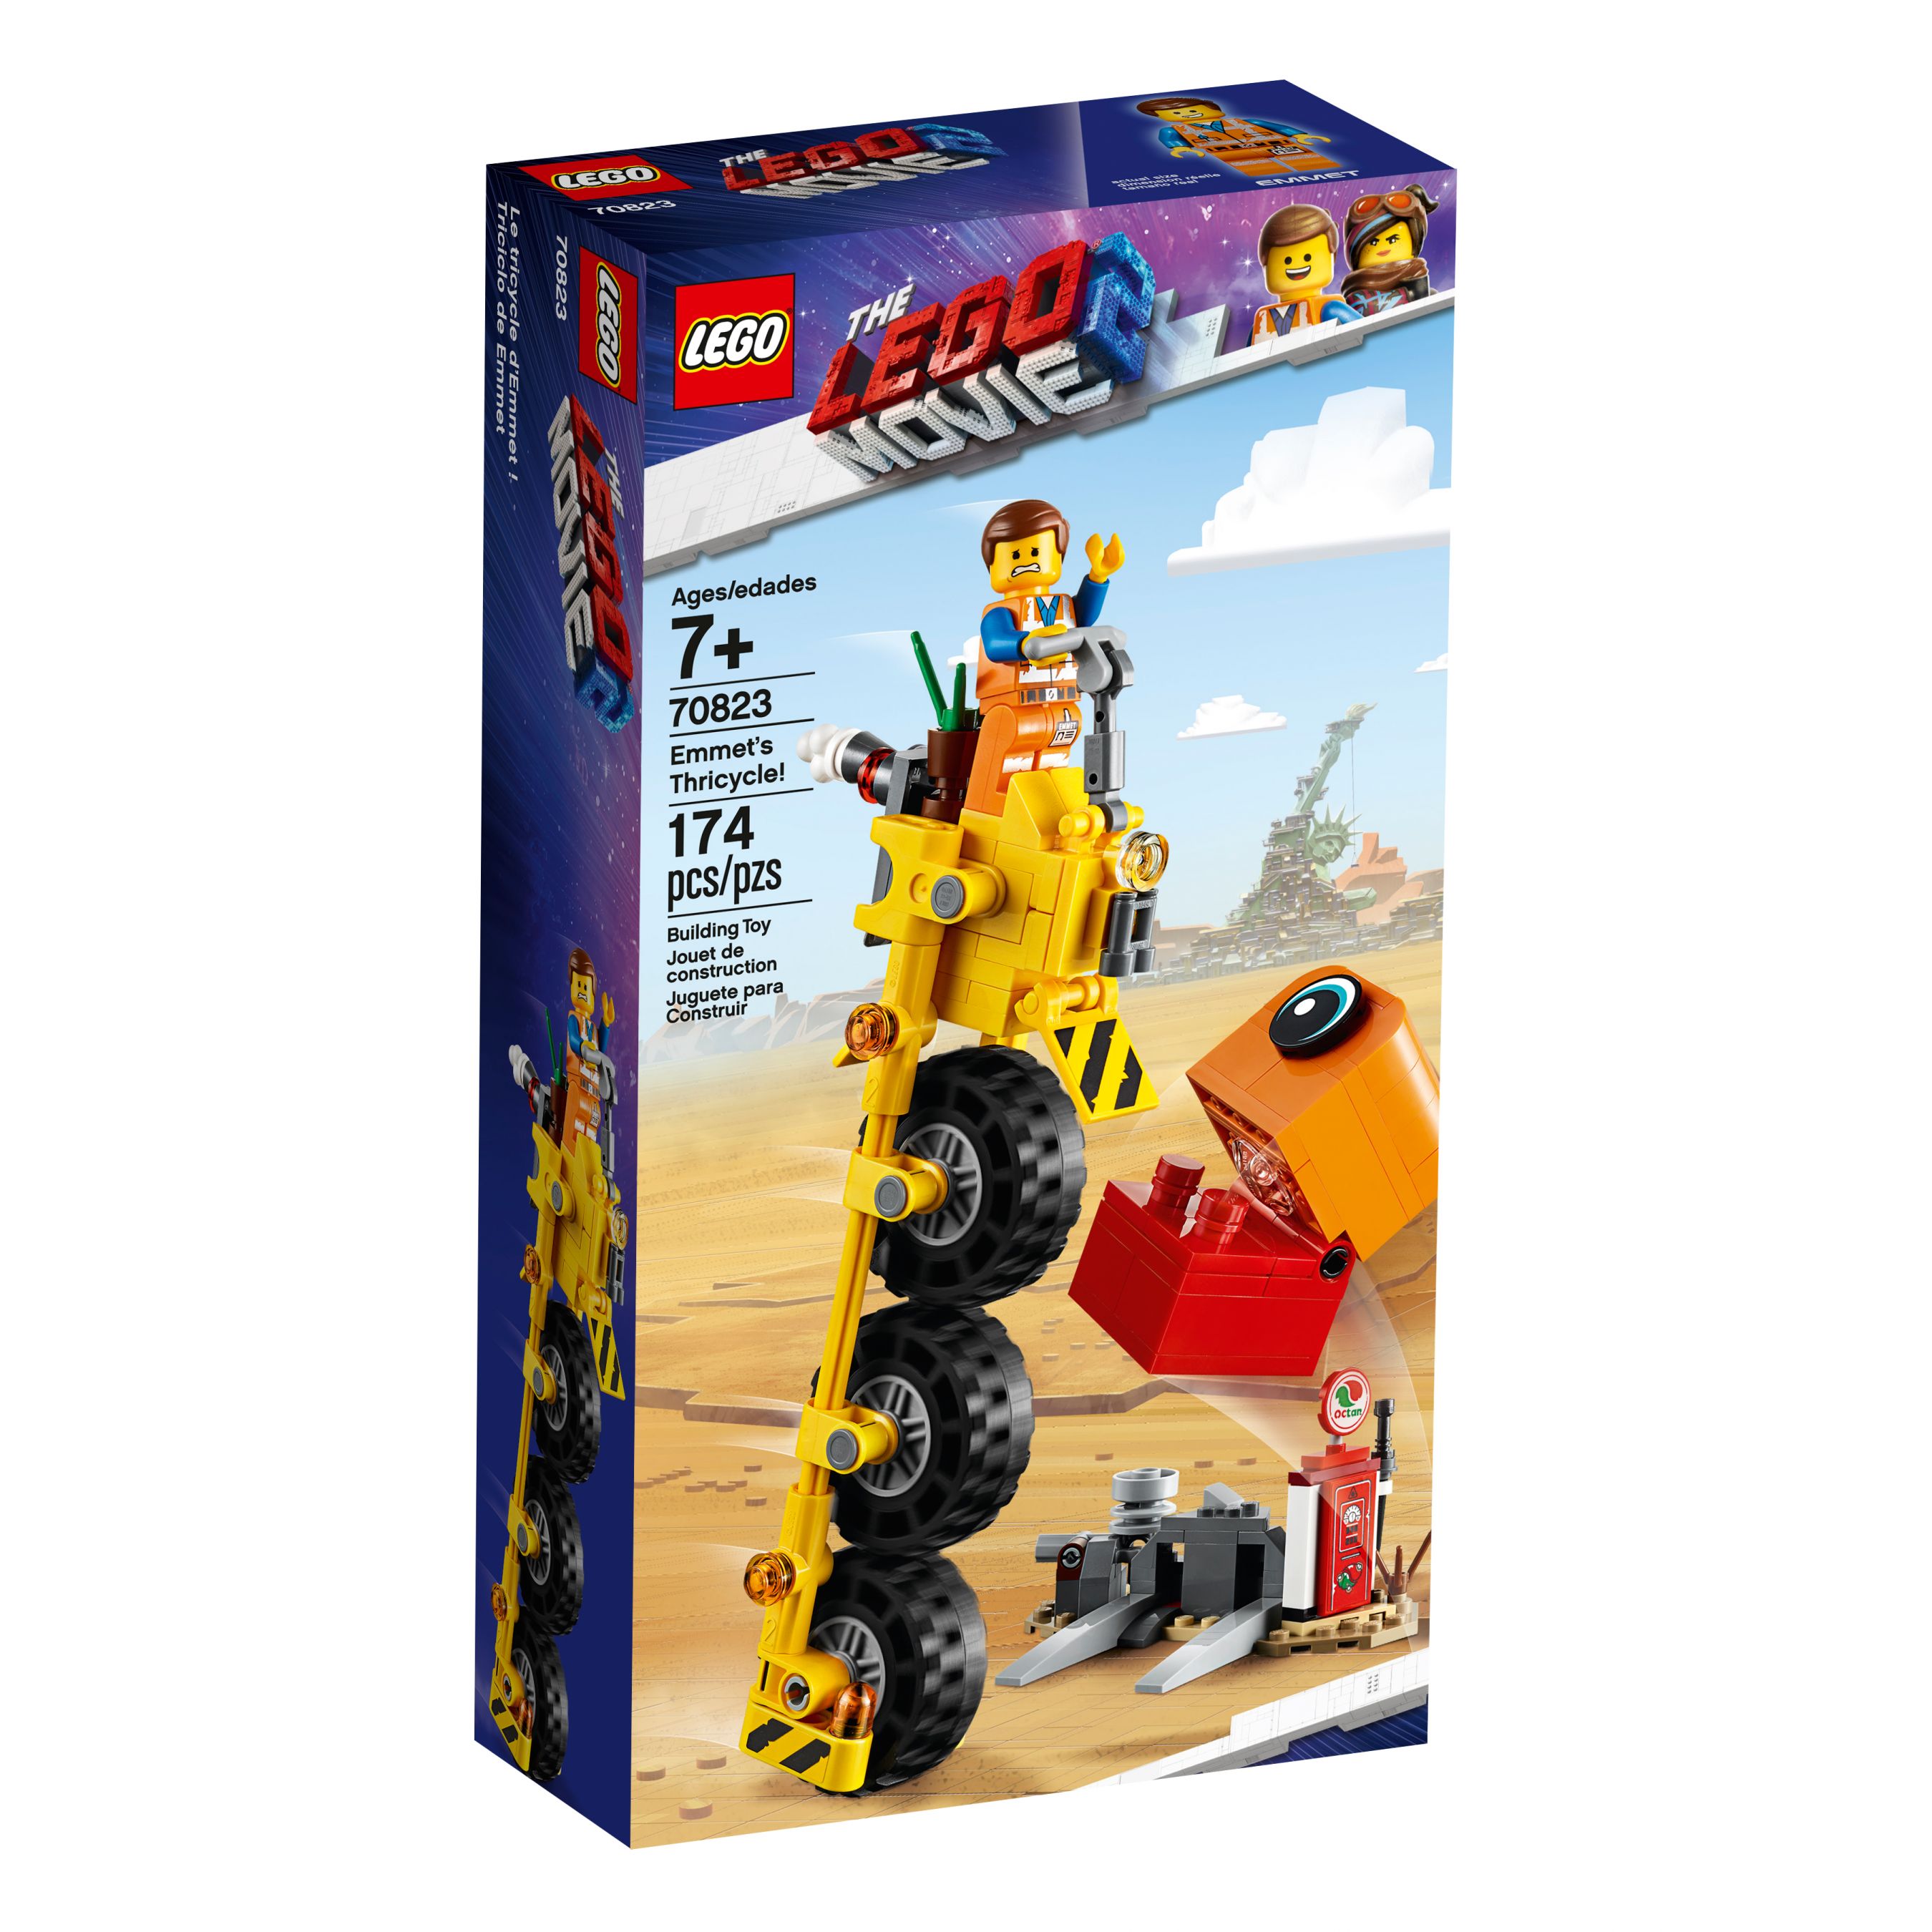 LEGO The LEGO Movie 2 70823 Emmets Dreirad! LEGO_70823_alt1.jpg